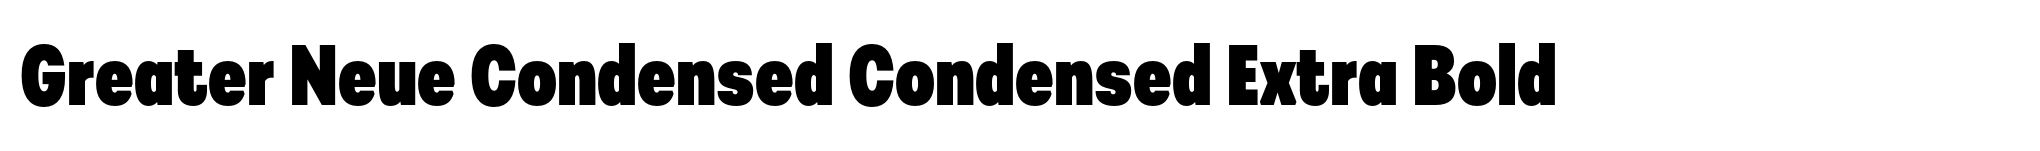 Greater Neue Condensed Condensed Extra Bold image